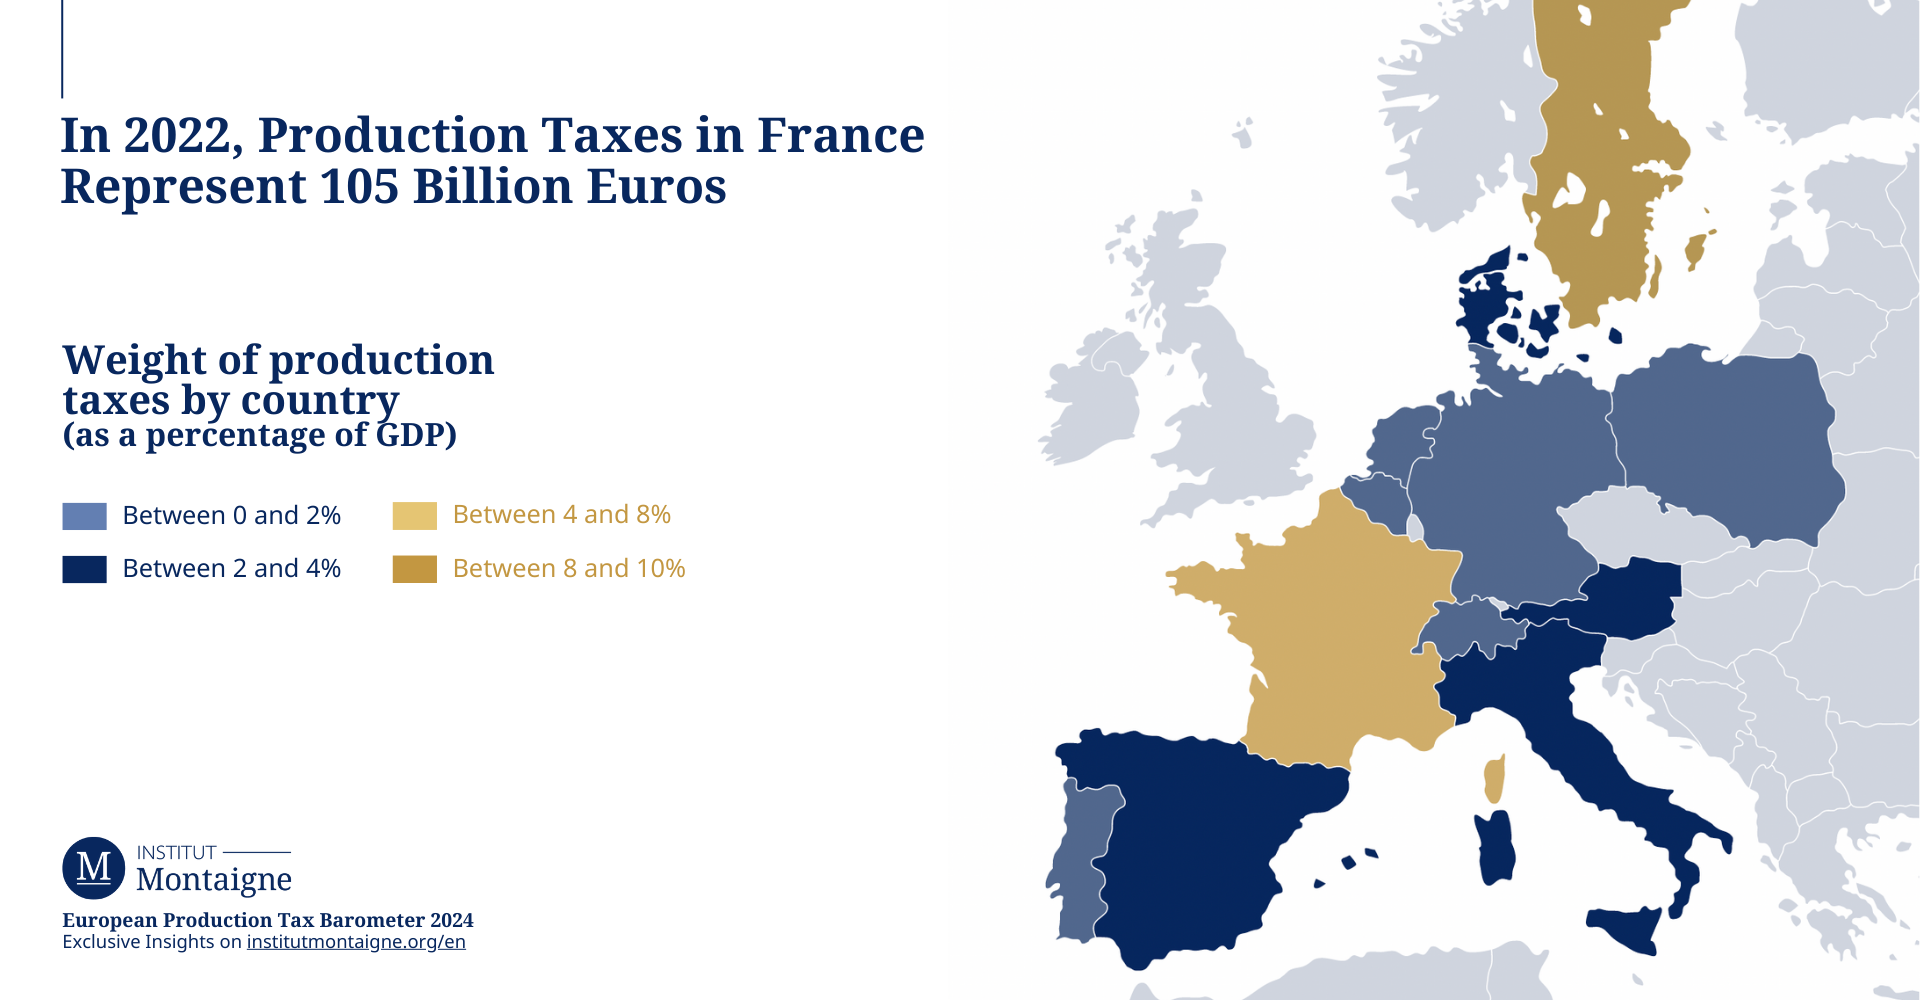 European Production Taxes Barometer 2024